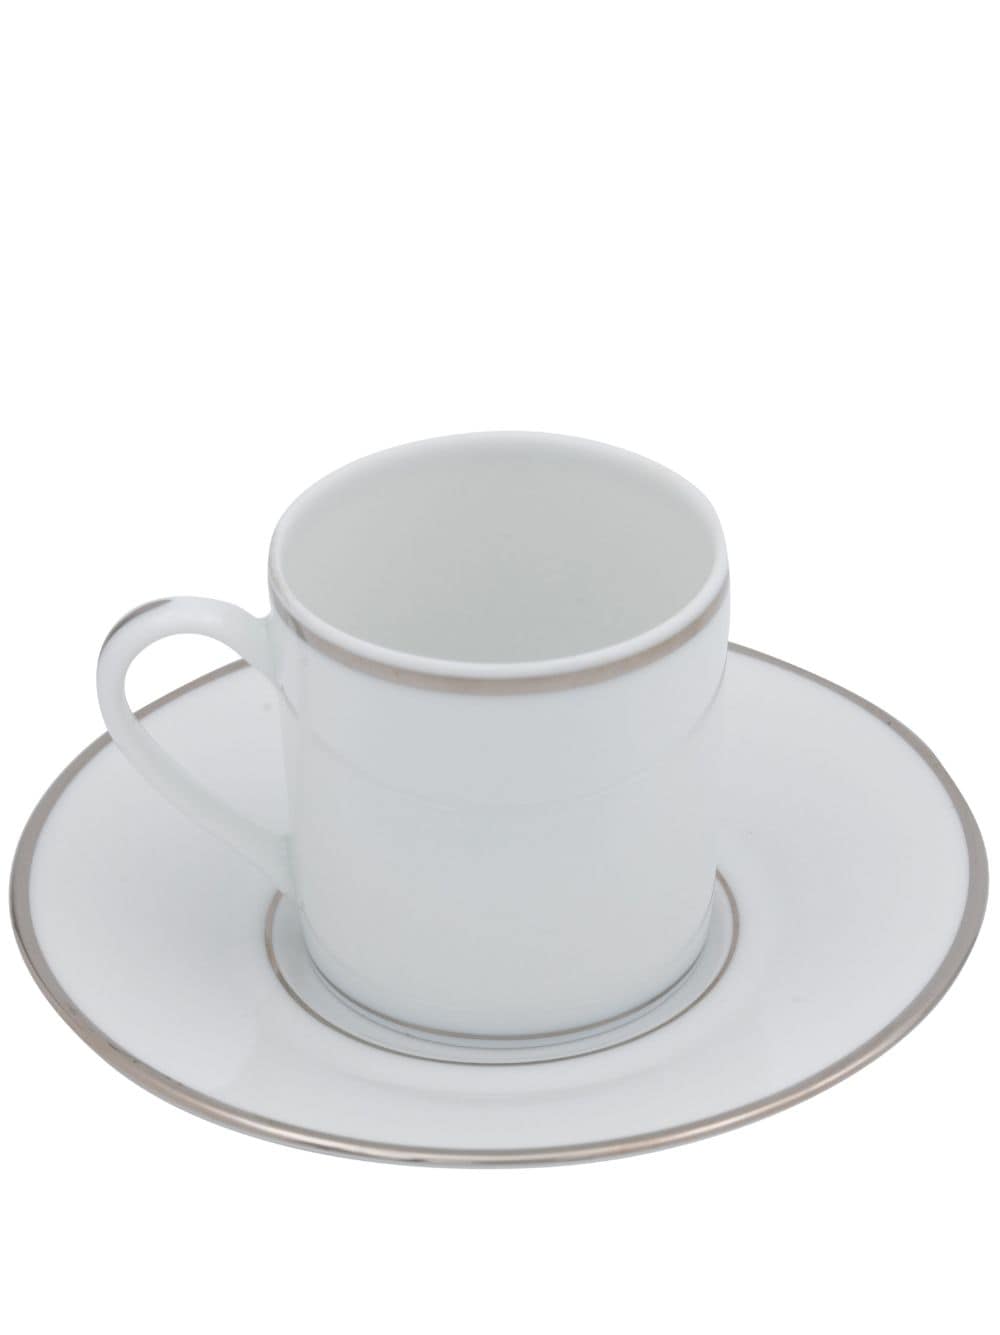 Christofle Gilded Demitasse cup and saucer - White von Christofle